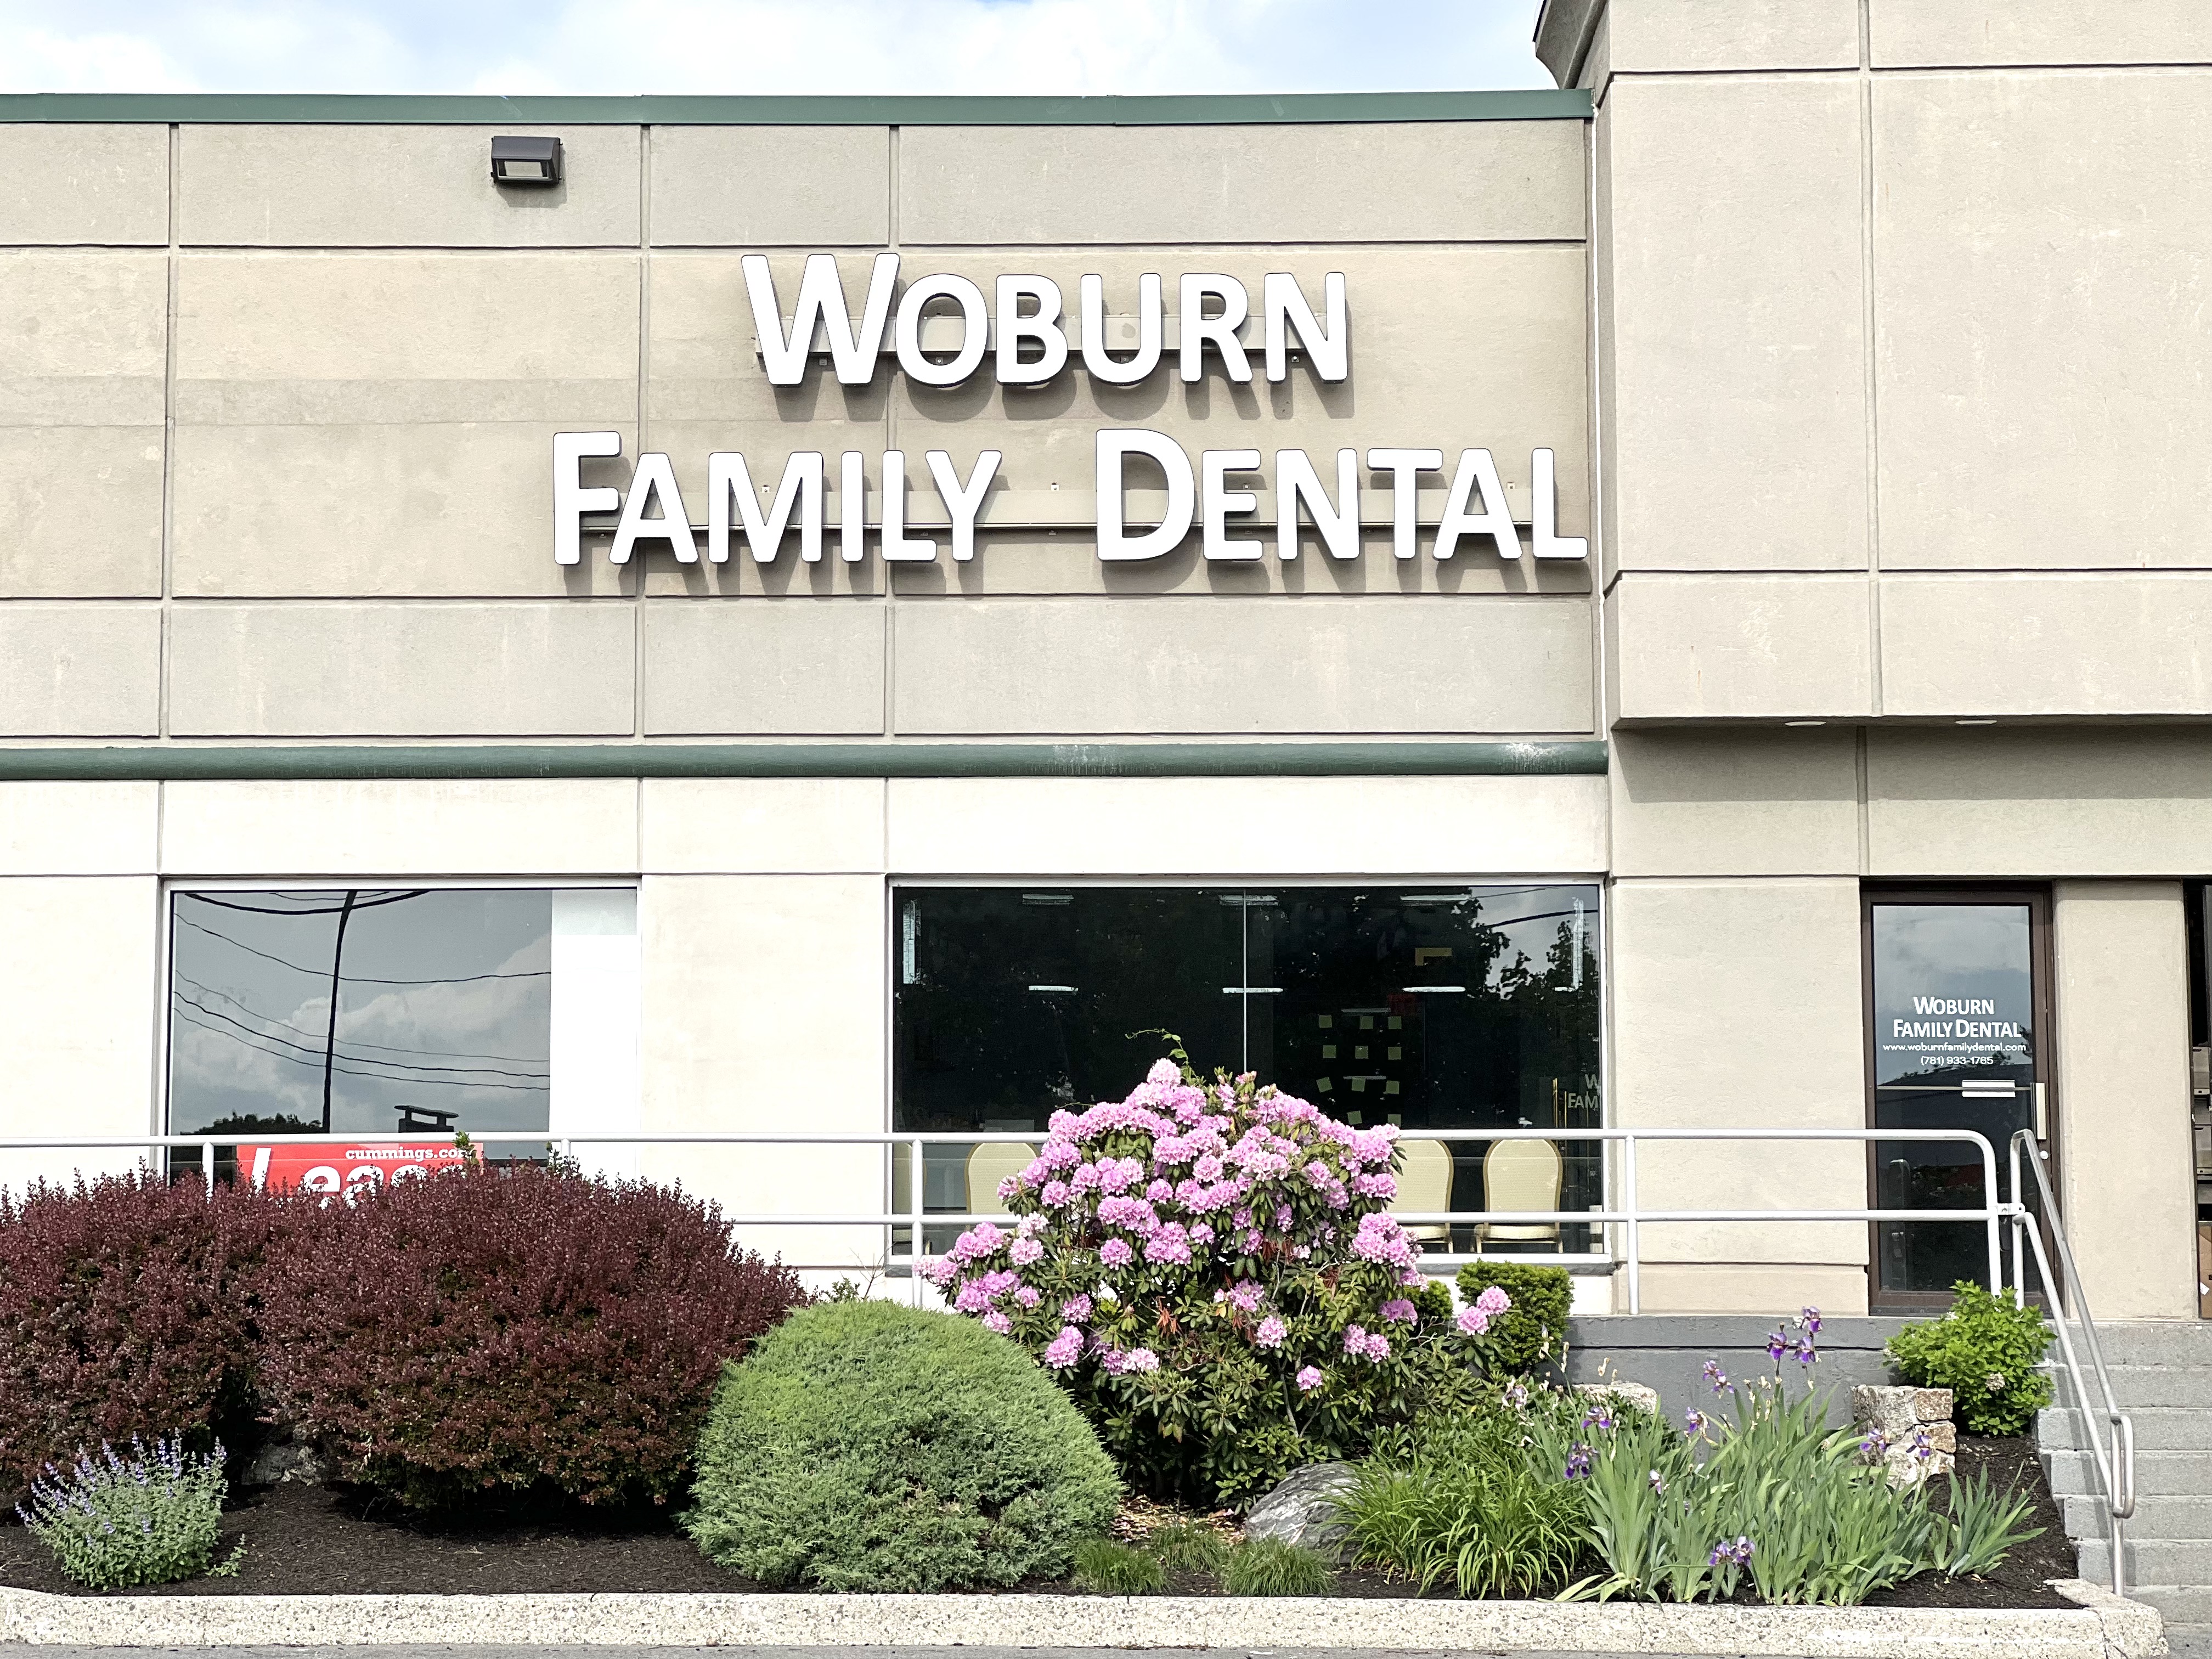 Woburn Family Dental exterior